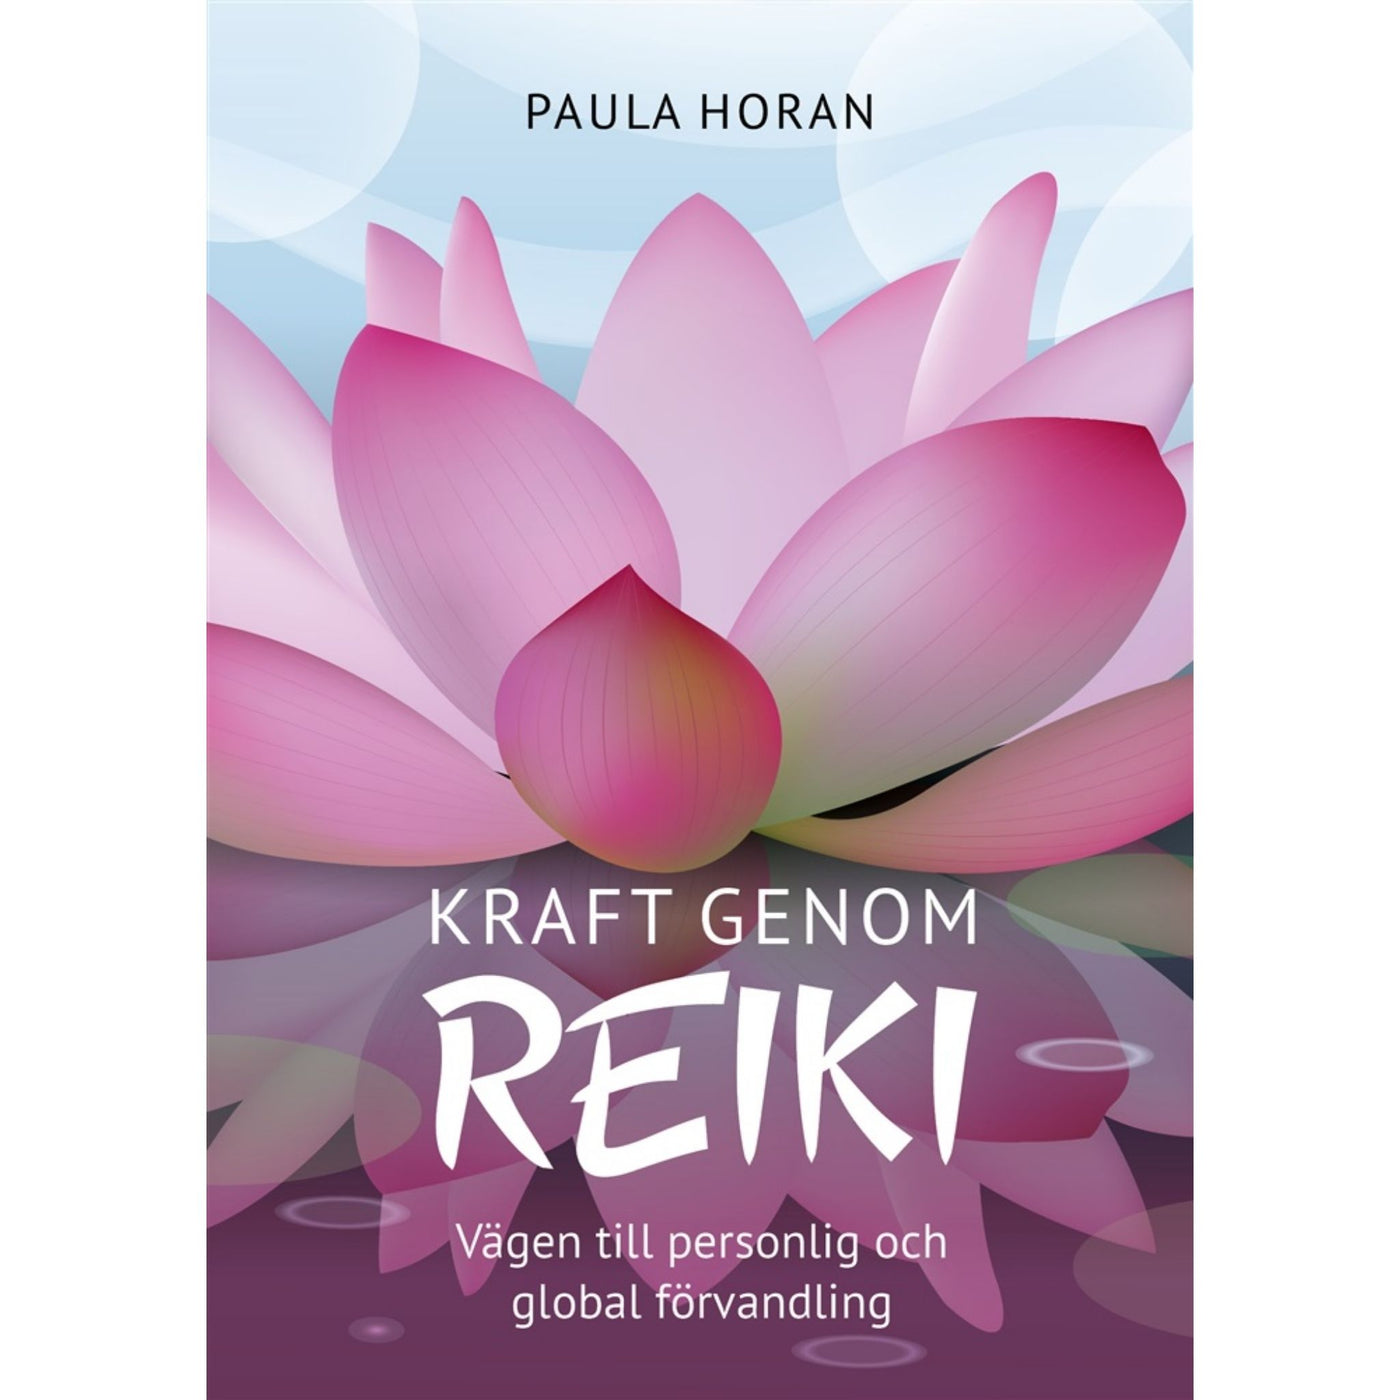 Kraft genom reiki - bok av Paula Horan.